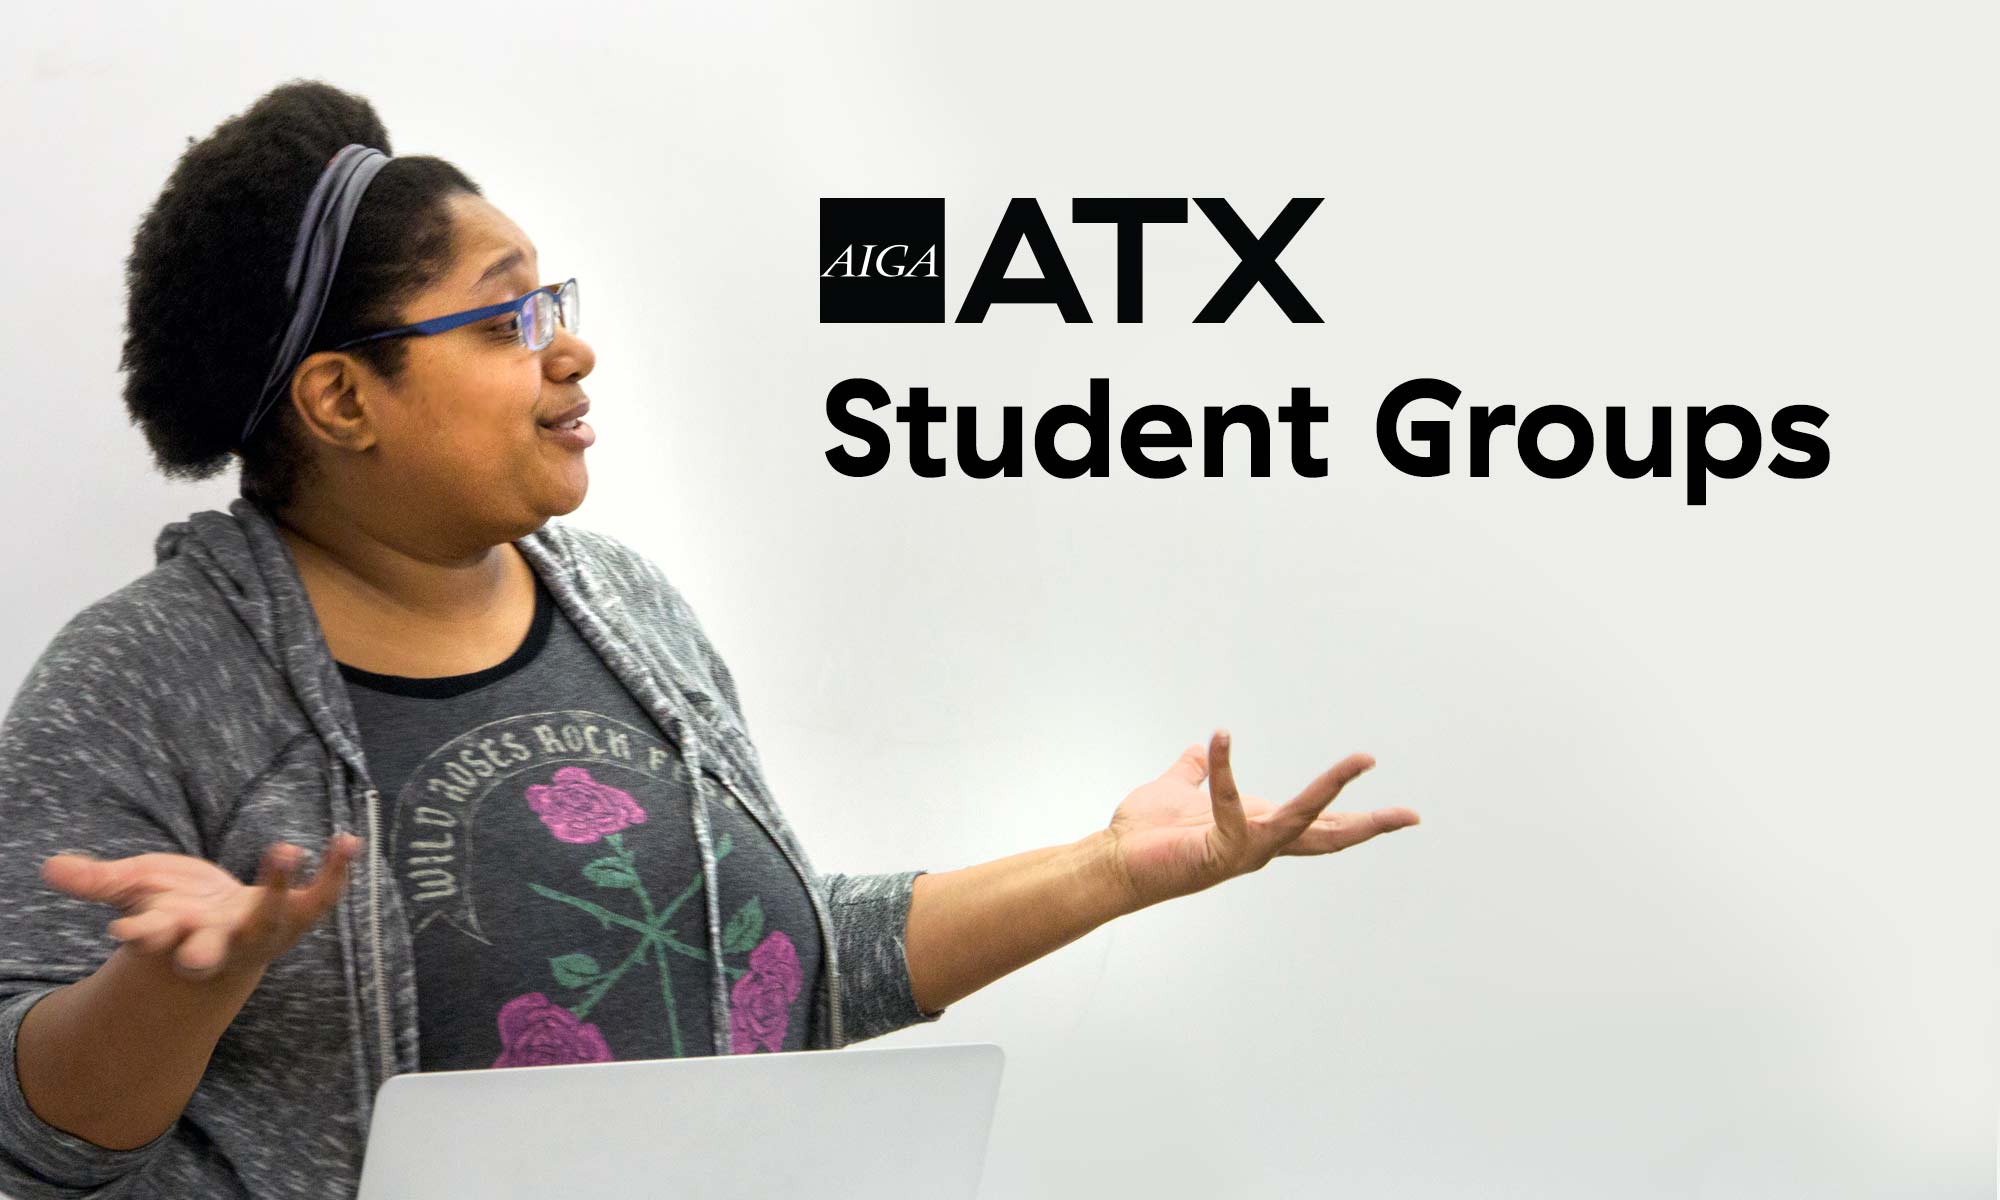 AIGA Austin Student Groups